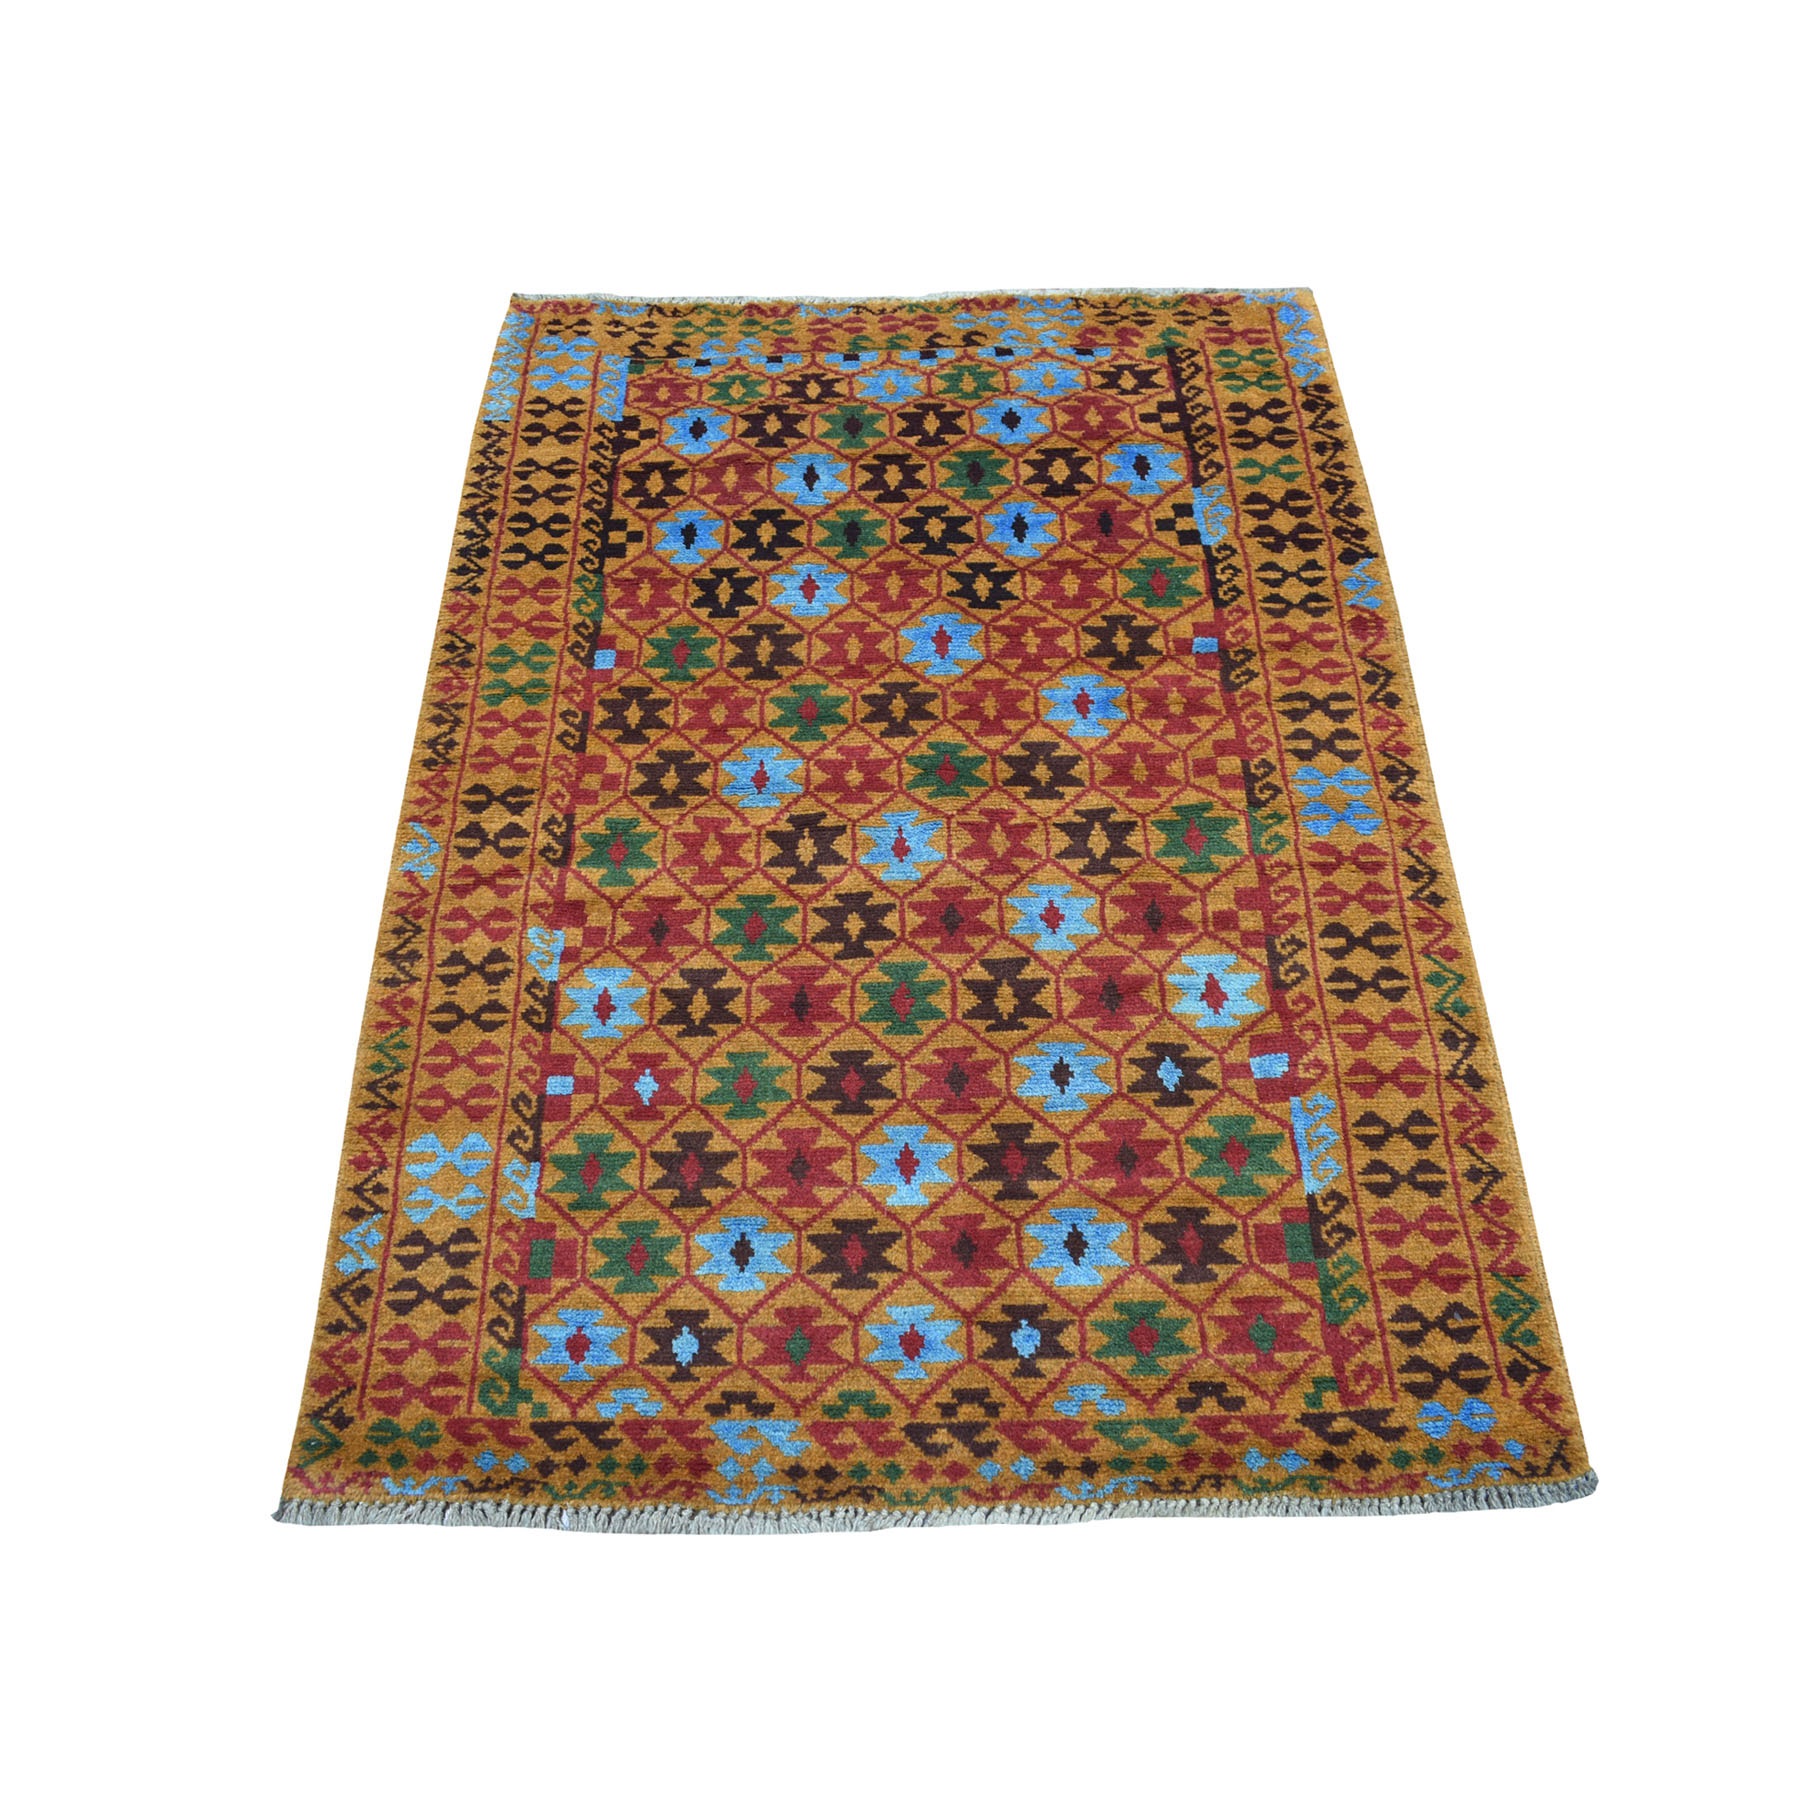 3'5"x4'10" Orange Tribal Design Colorful Afghan Baluch Hand Woven Pure Wool Oriental Rug 